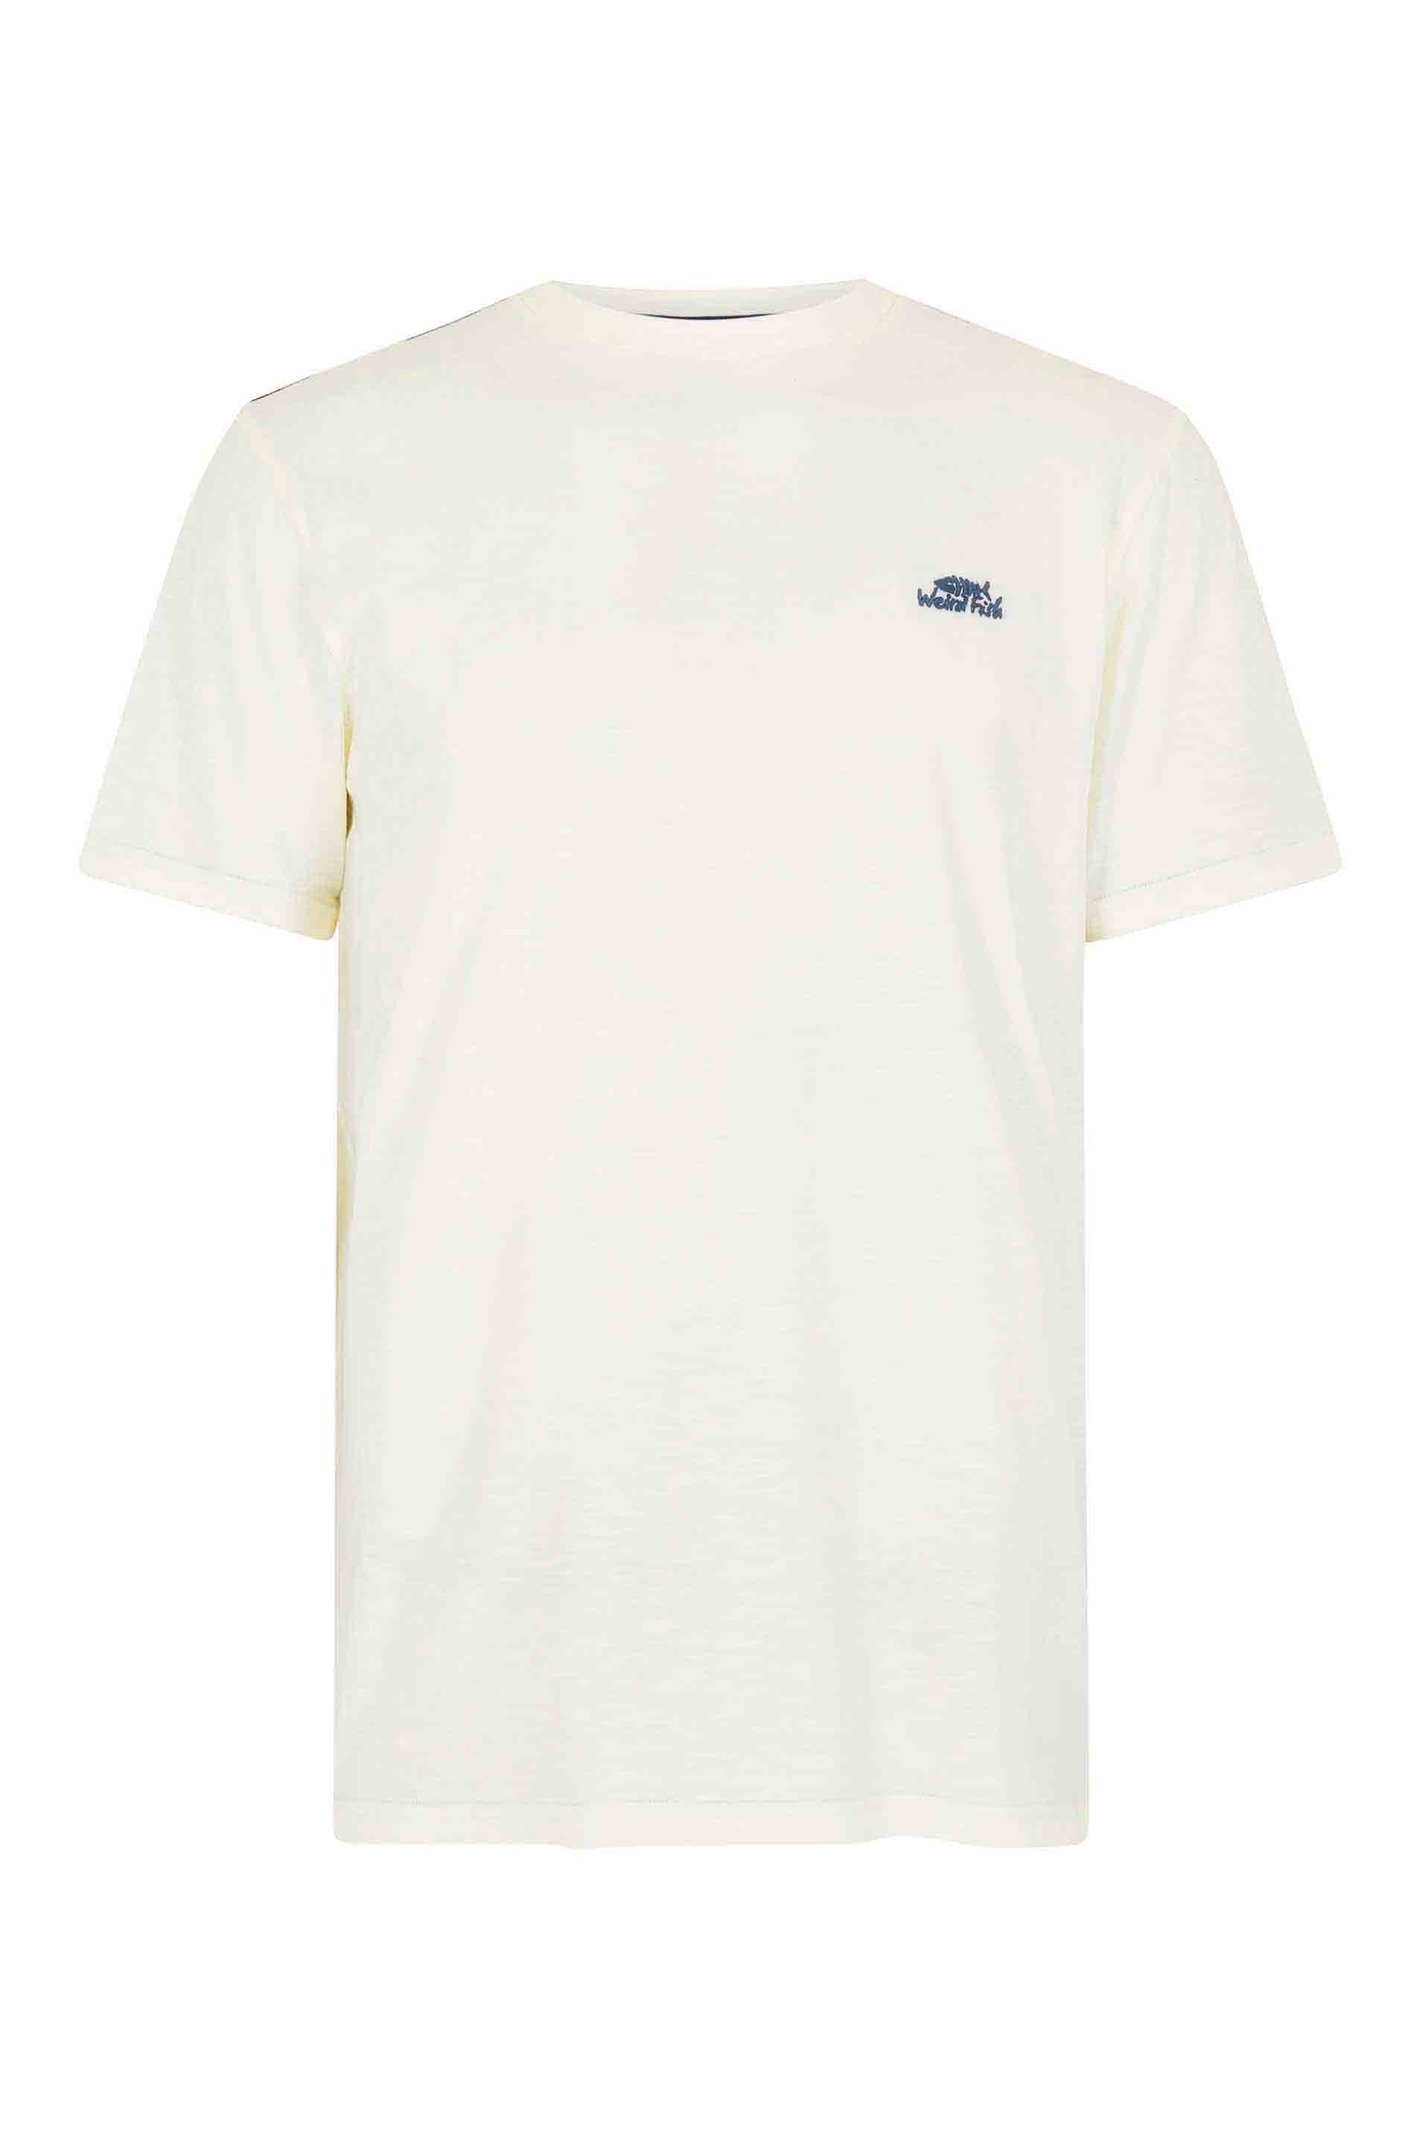 Weird Fish Fished Organic Cotton T-Shirt Dusty White Size 2XL